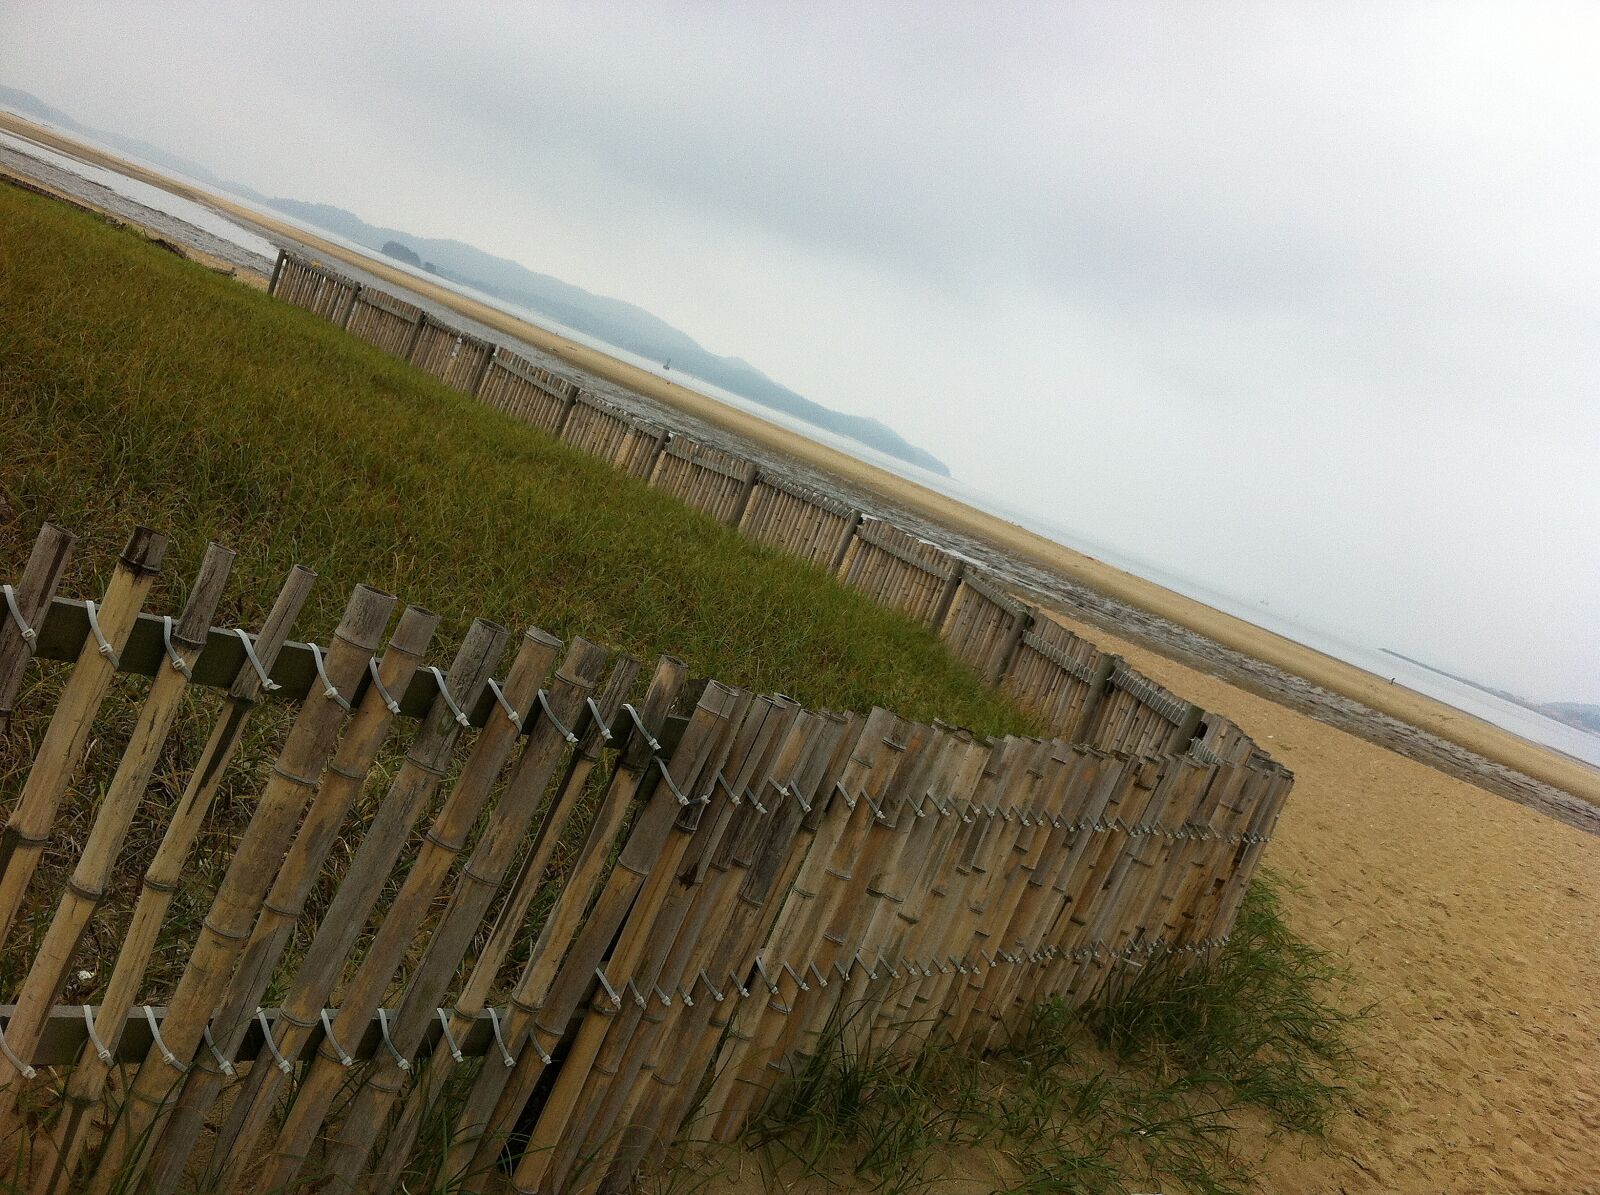 Apple iPhone 4 + iPhone 4 back camera 3.85mm f/2.8 sample photo. Beach, sandy, landscape photography